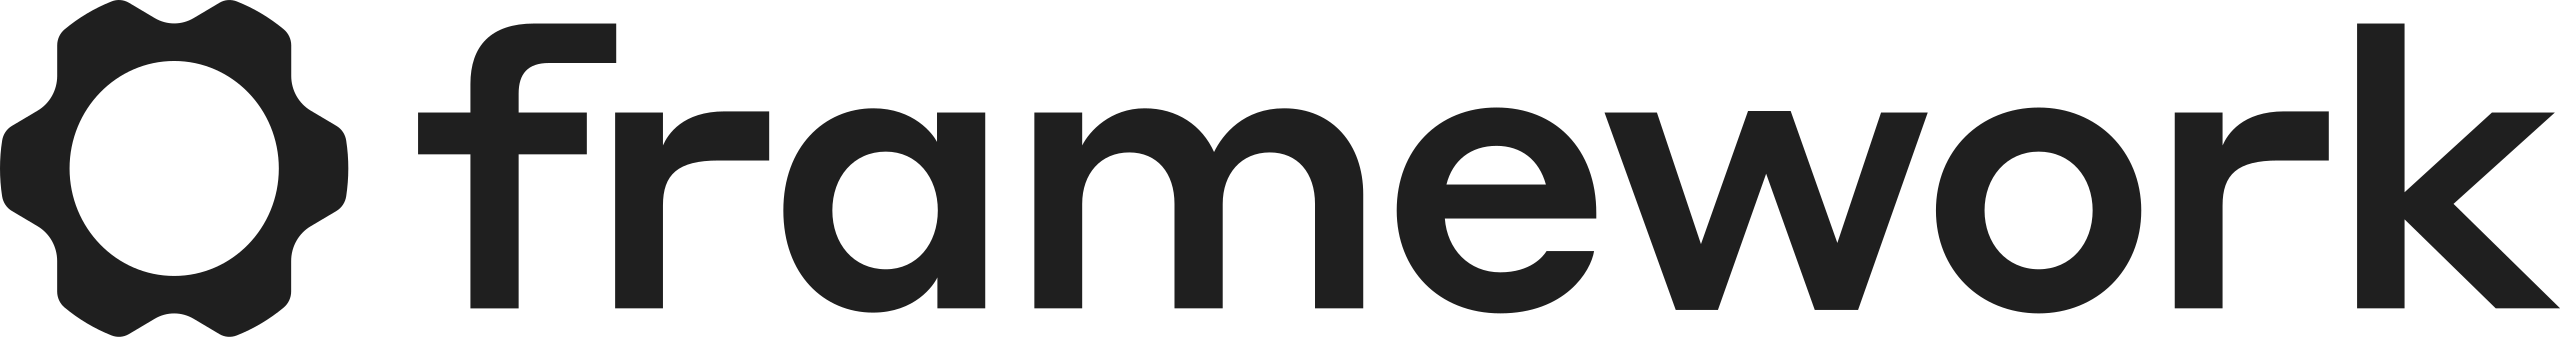 File:Framework Computer logo.svg - Wikipedia